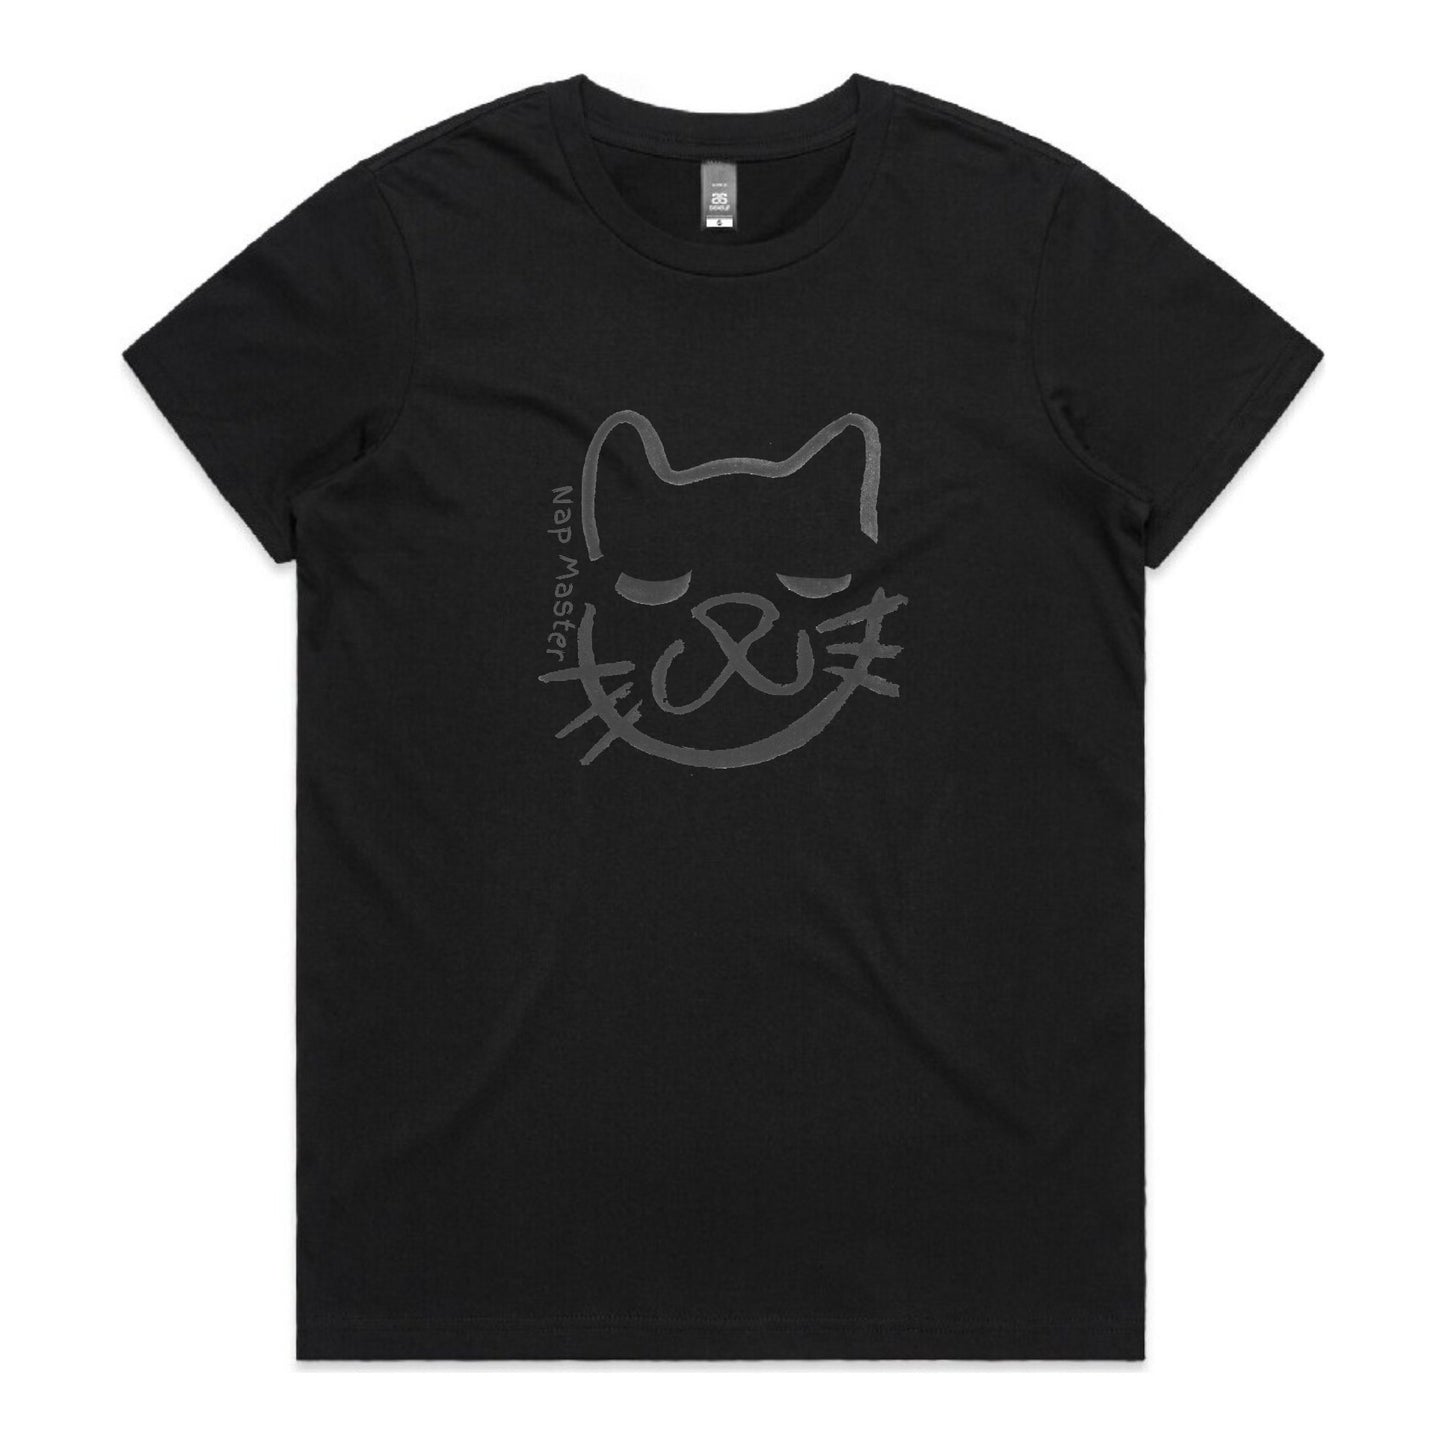 Nap Master Cat - Woman's T-Shirt